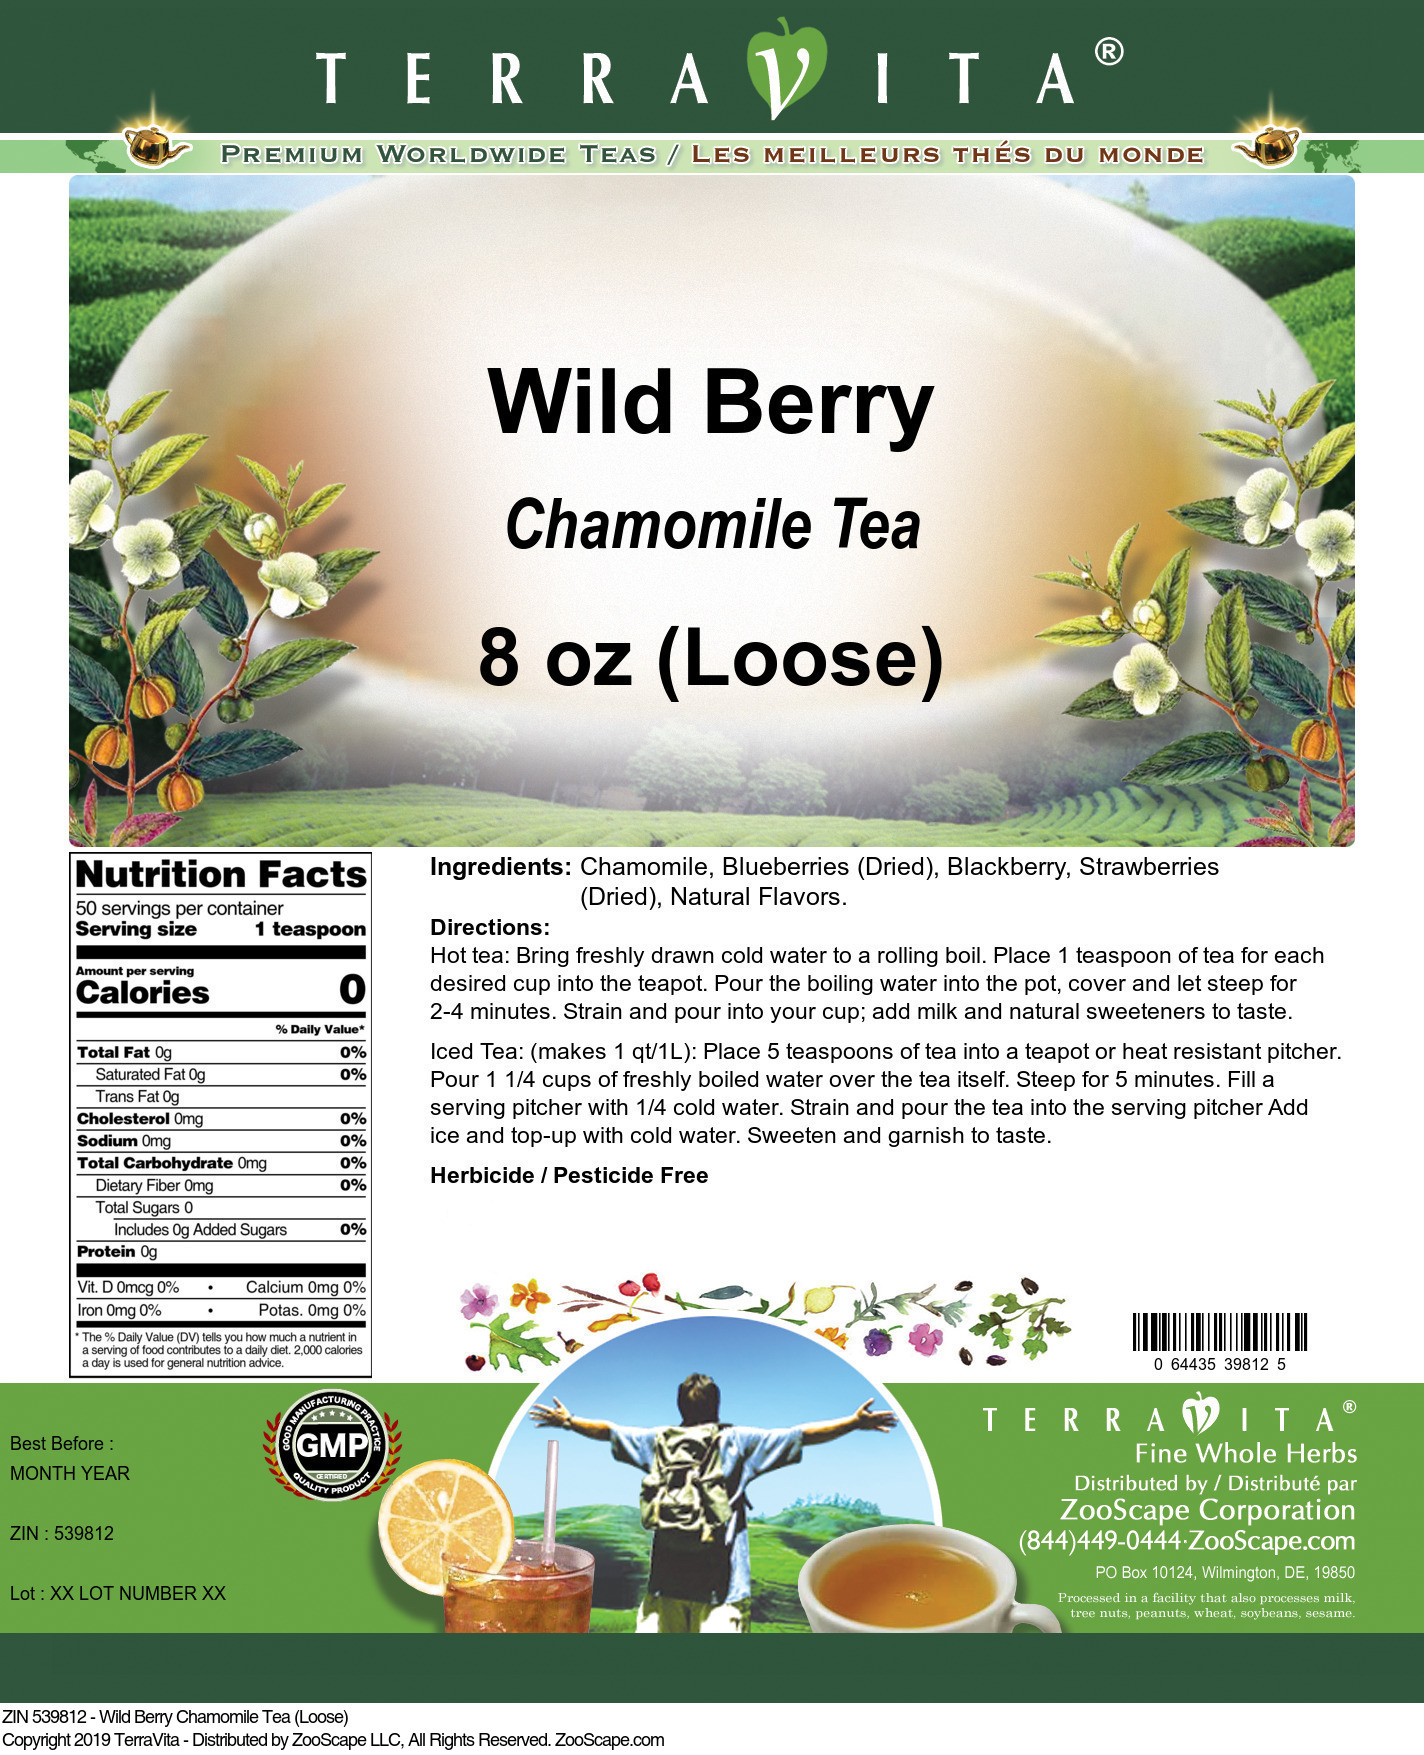 Wild Berry Chamomile Tea (Loose) - Label